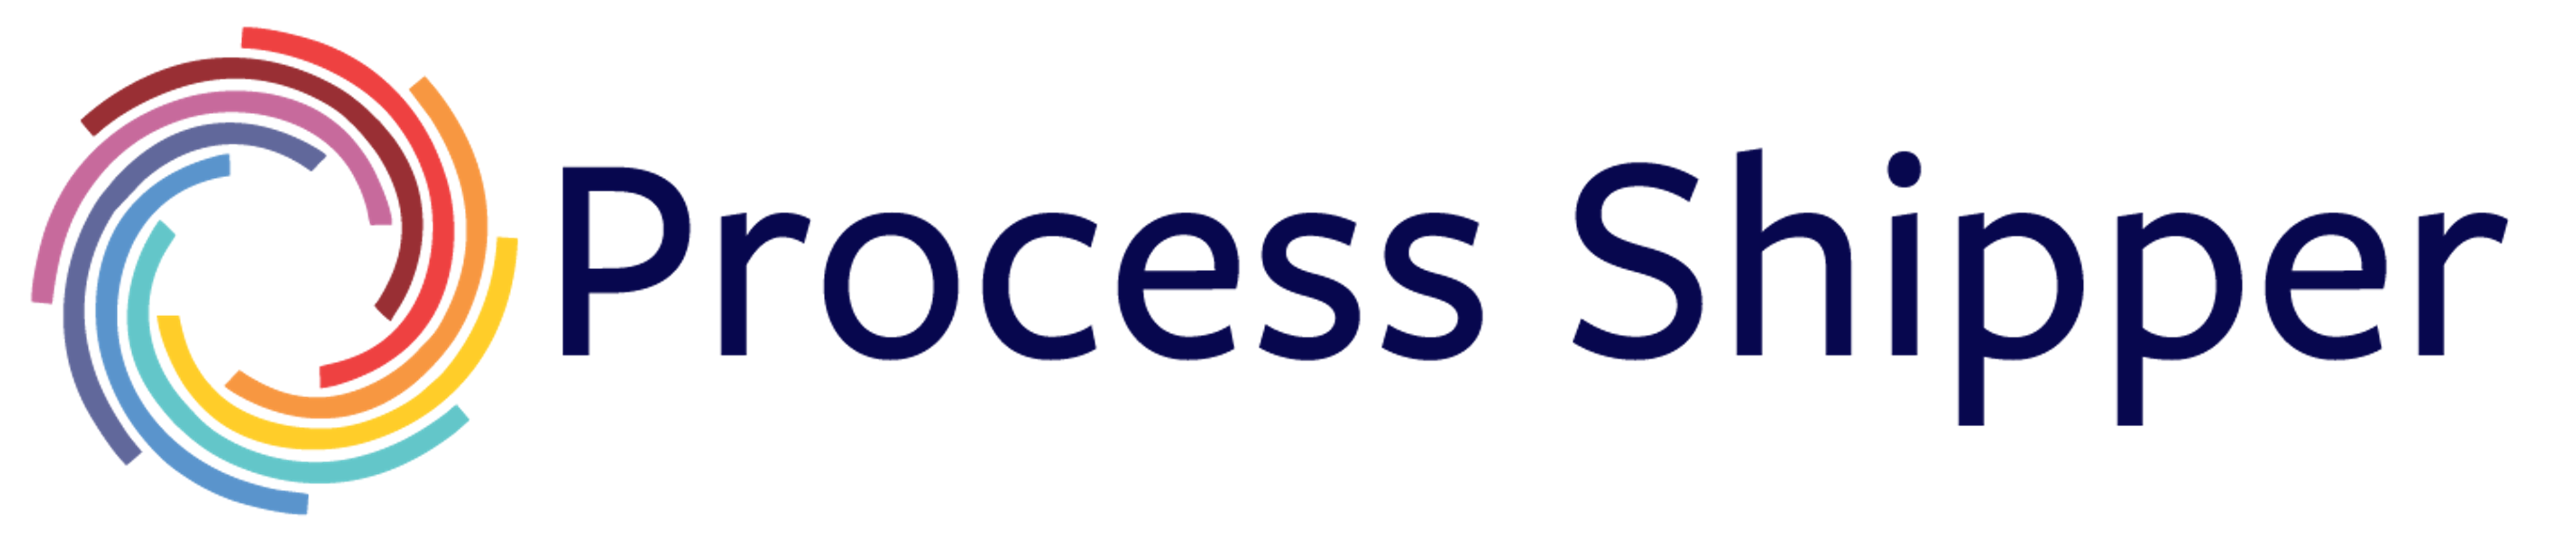 Process Shipper Logo